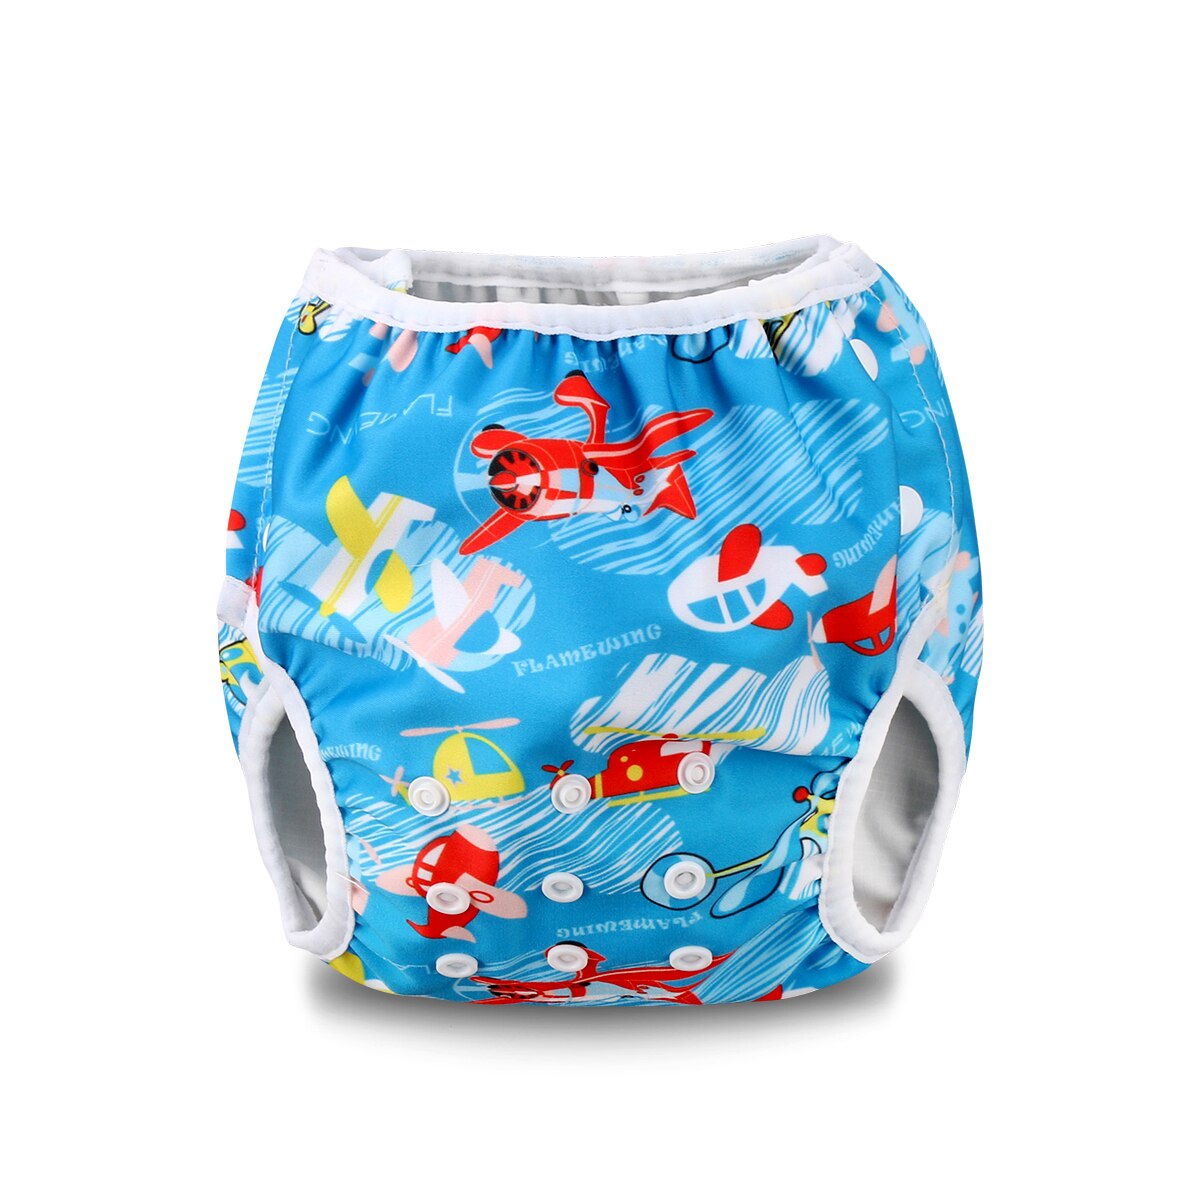 Goocheer baby svømmeble unisex svømmebukser til småbørn svømmebleer justerbar sommer badetøj til børn poolbukser: 3